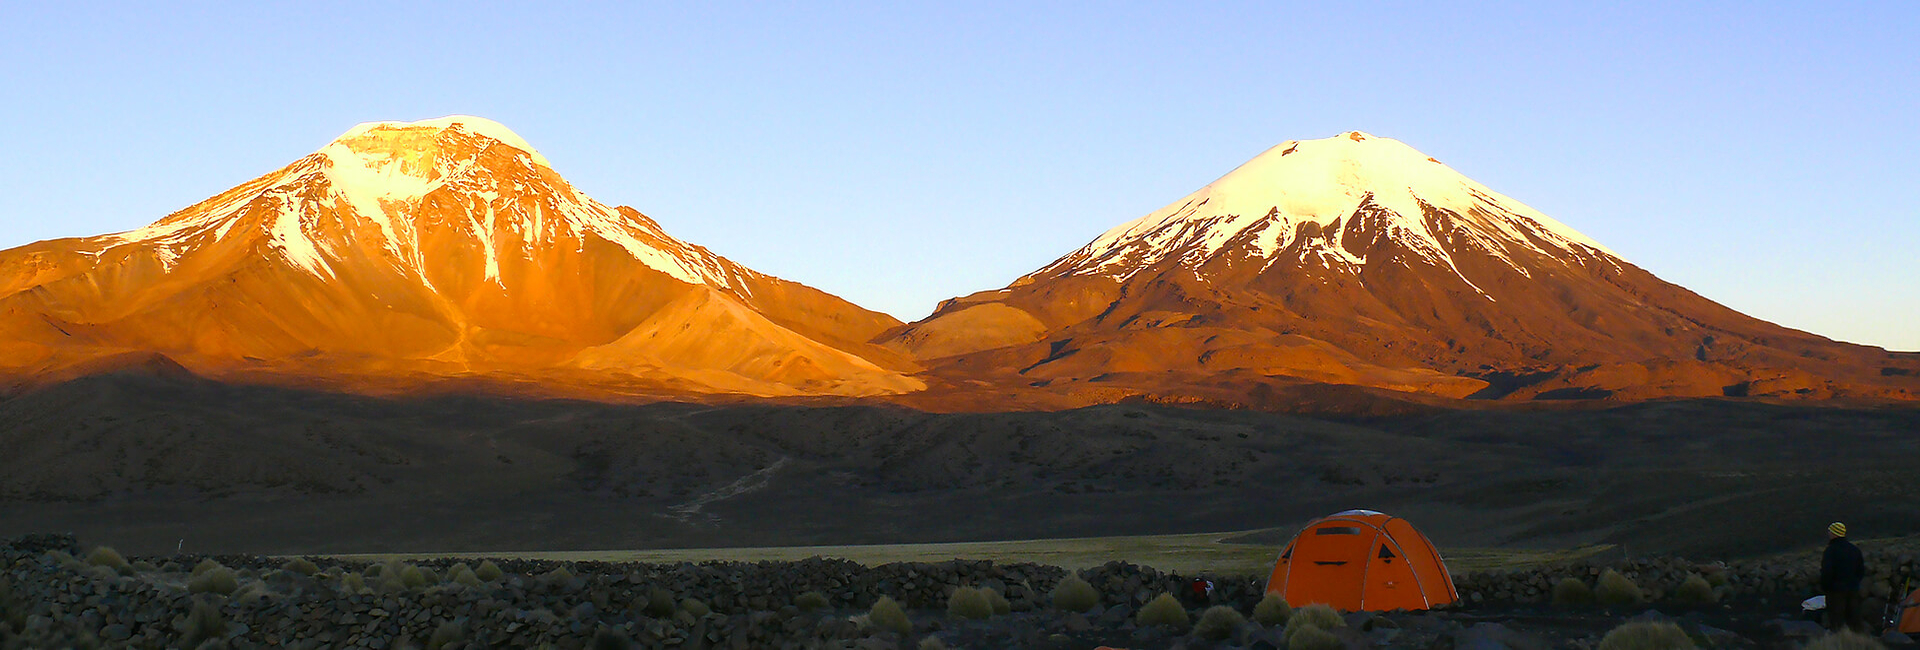 Volcanoes Parinacota and Pomerape in the Chilean Andes, Altiplano